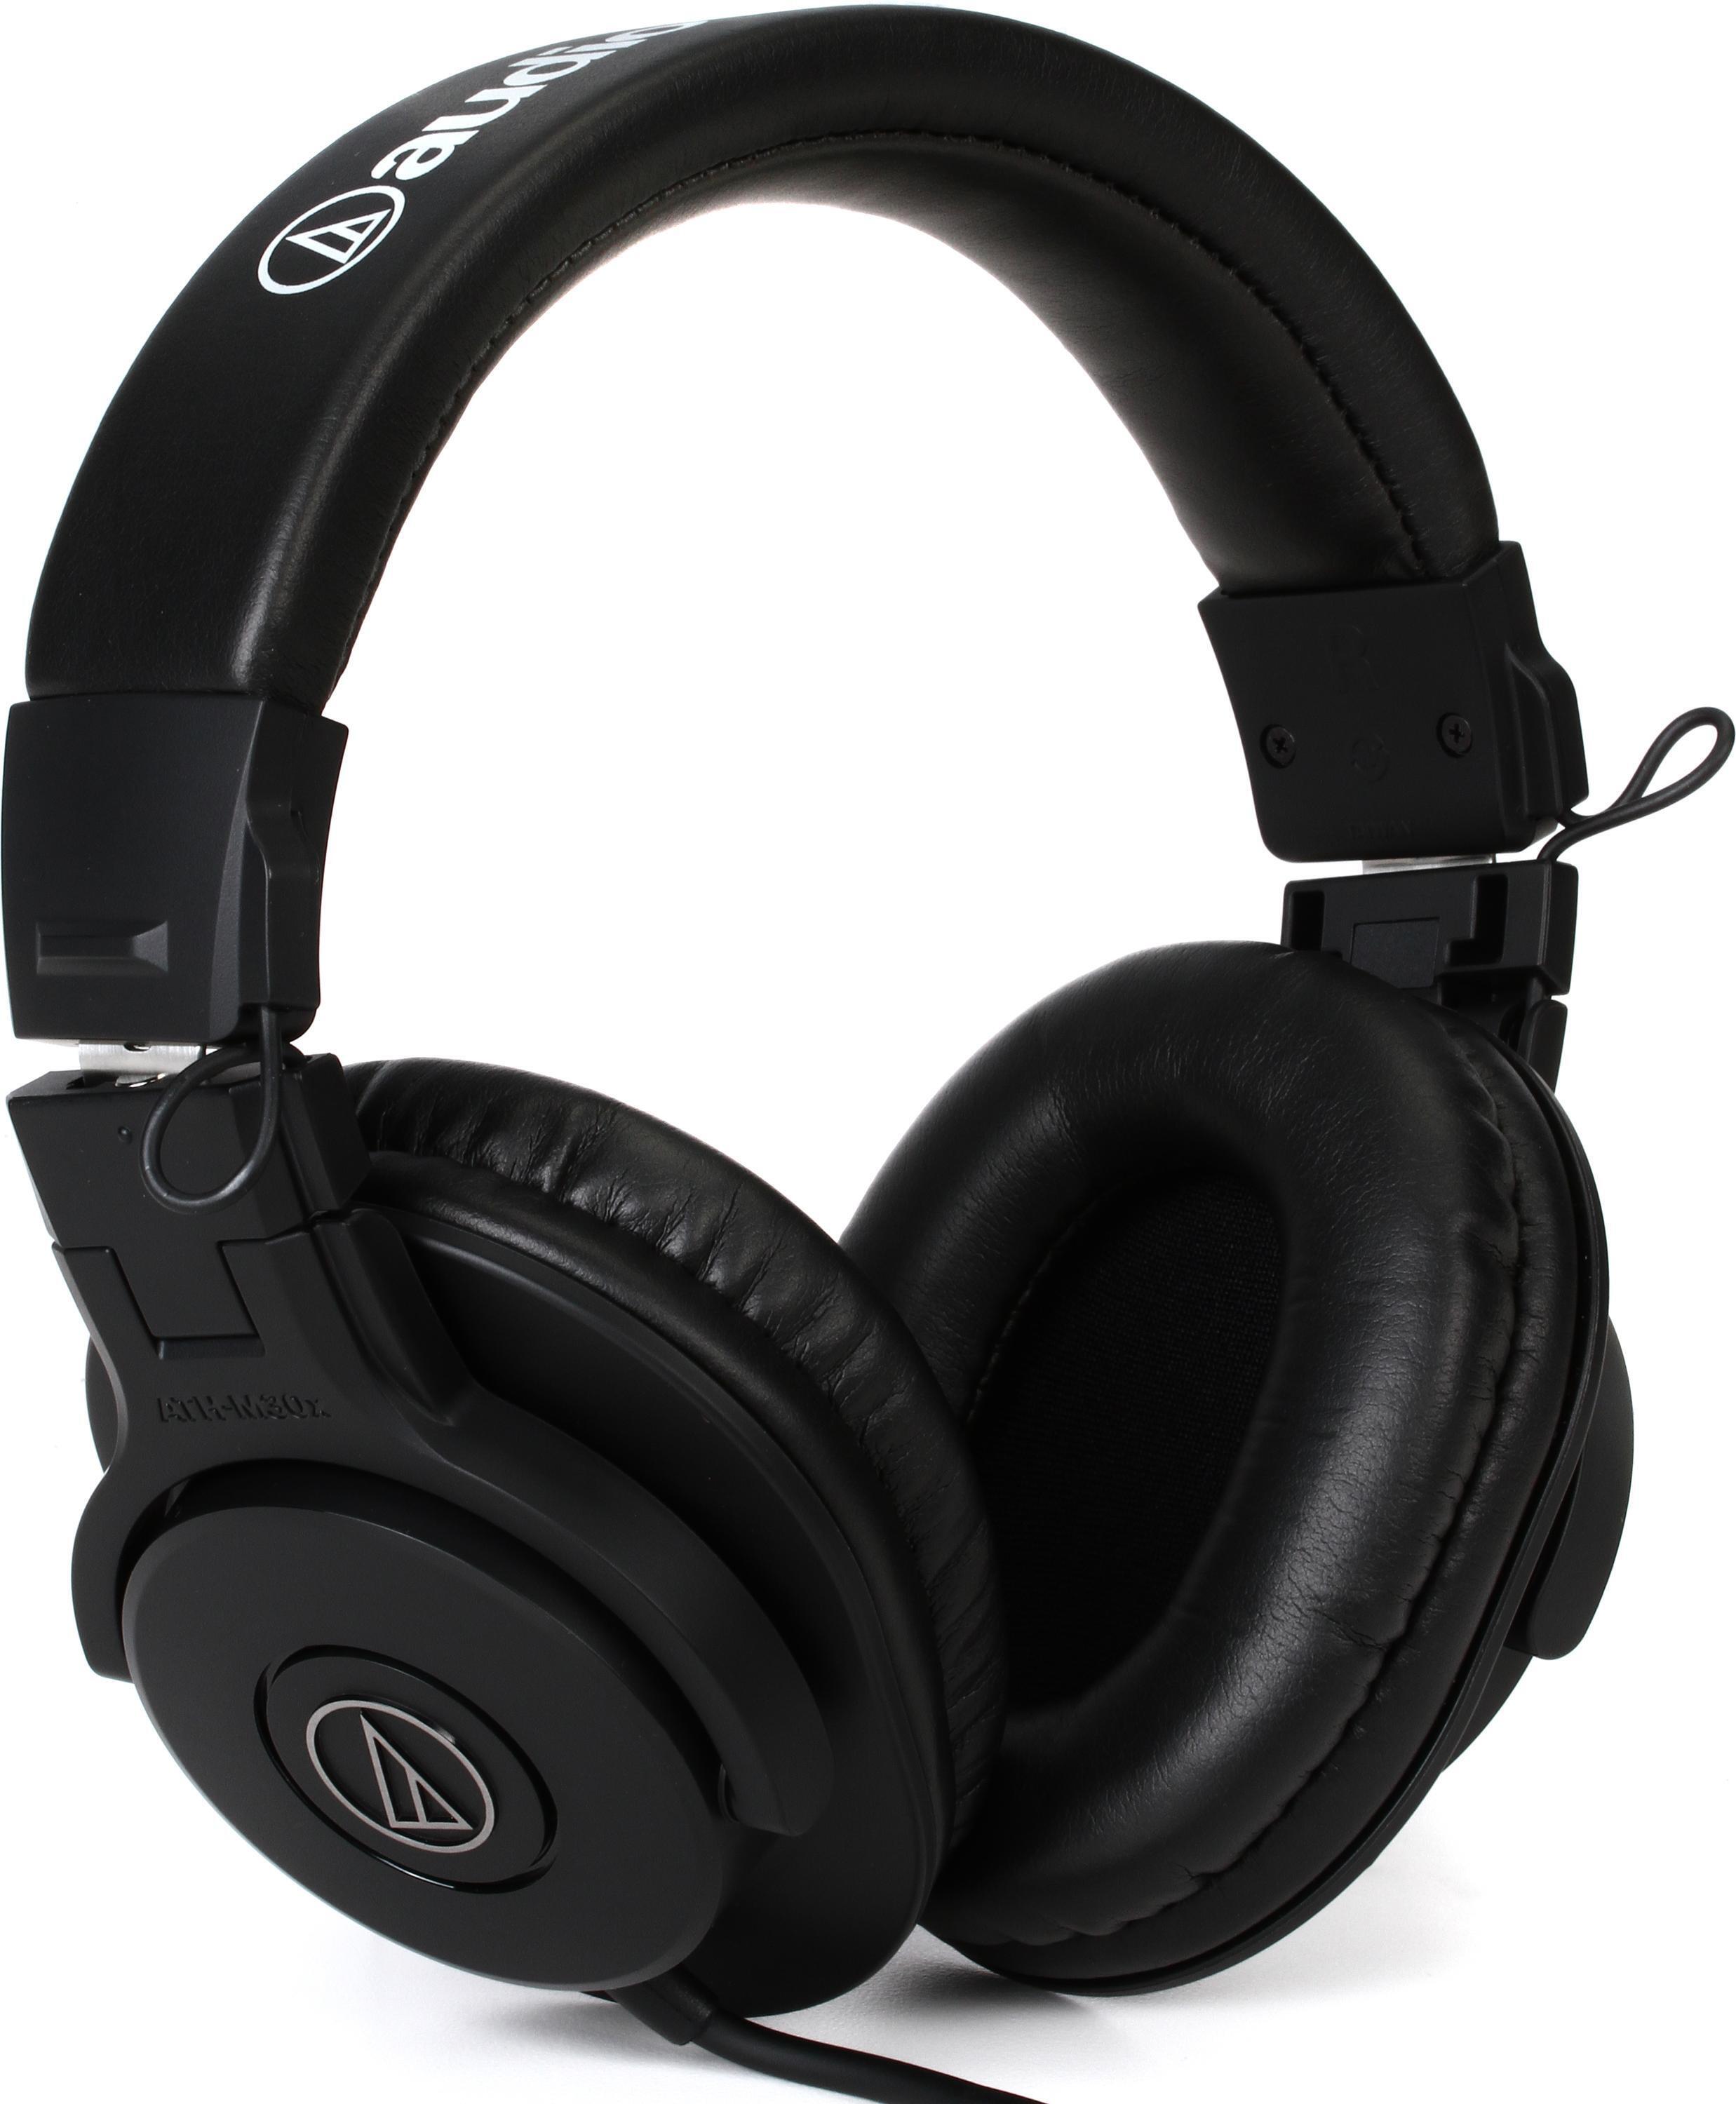 Bundled Item: Audio-Technica ATH-M30x Closed-back Monitoring Headphones